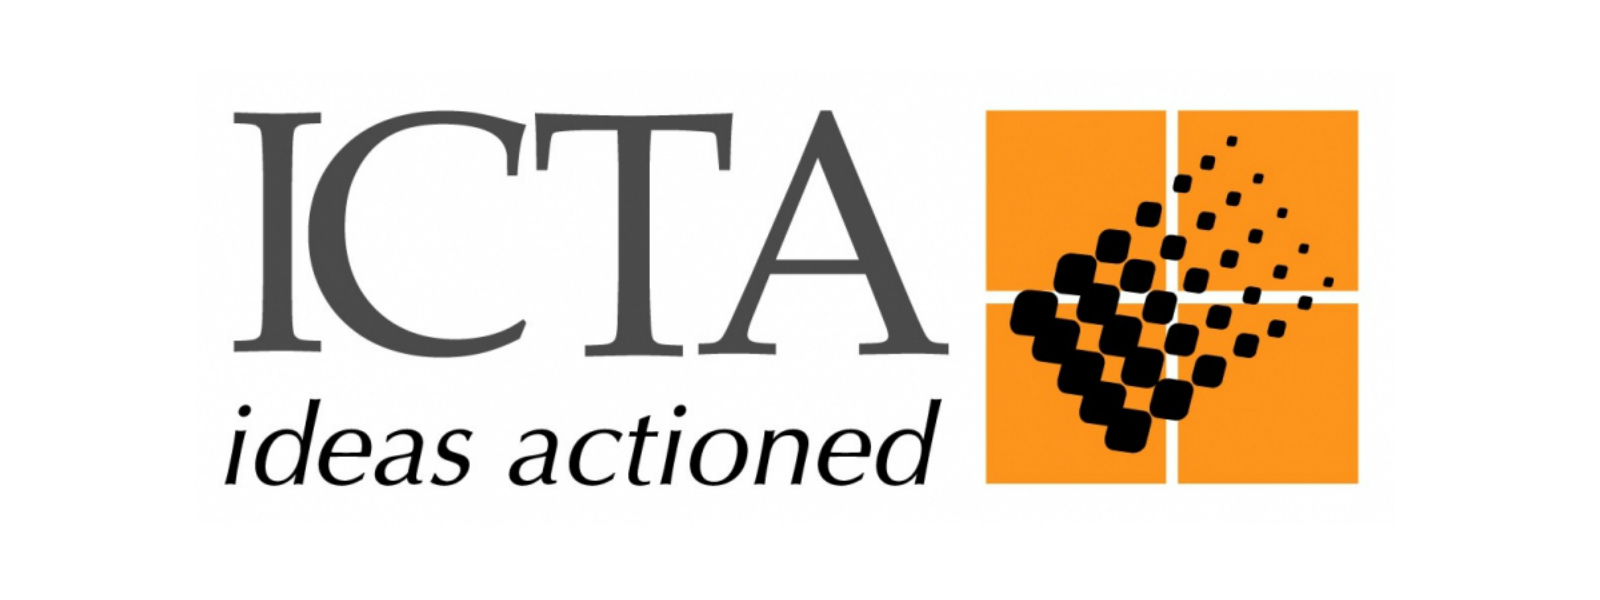 Government websites aren't being updated - ICTA 